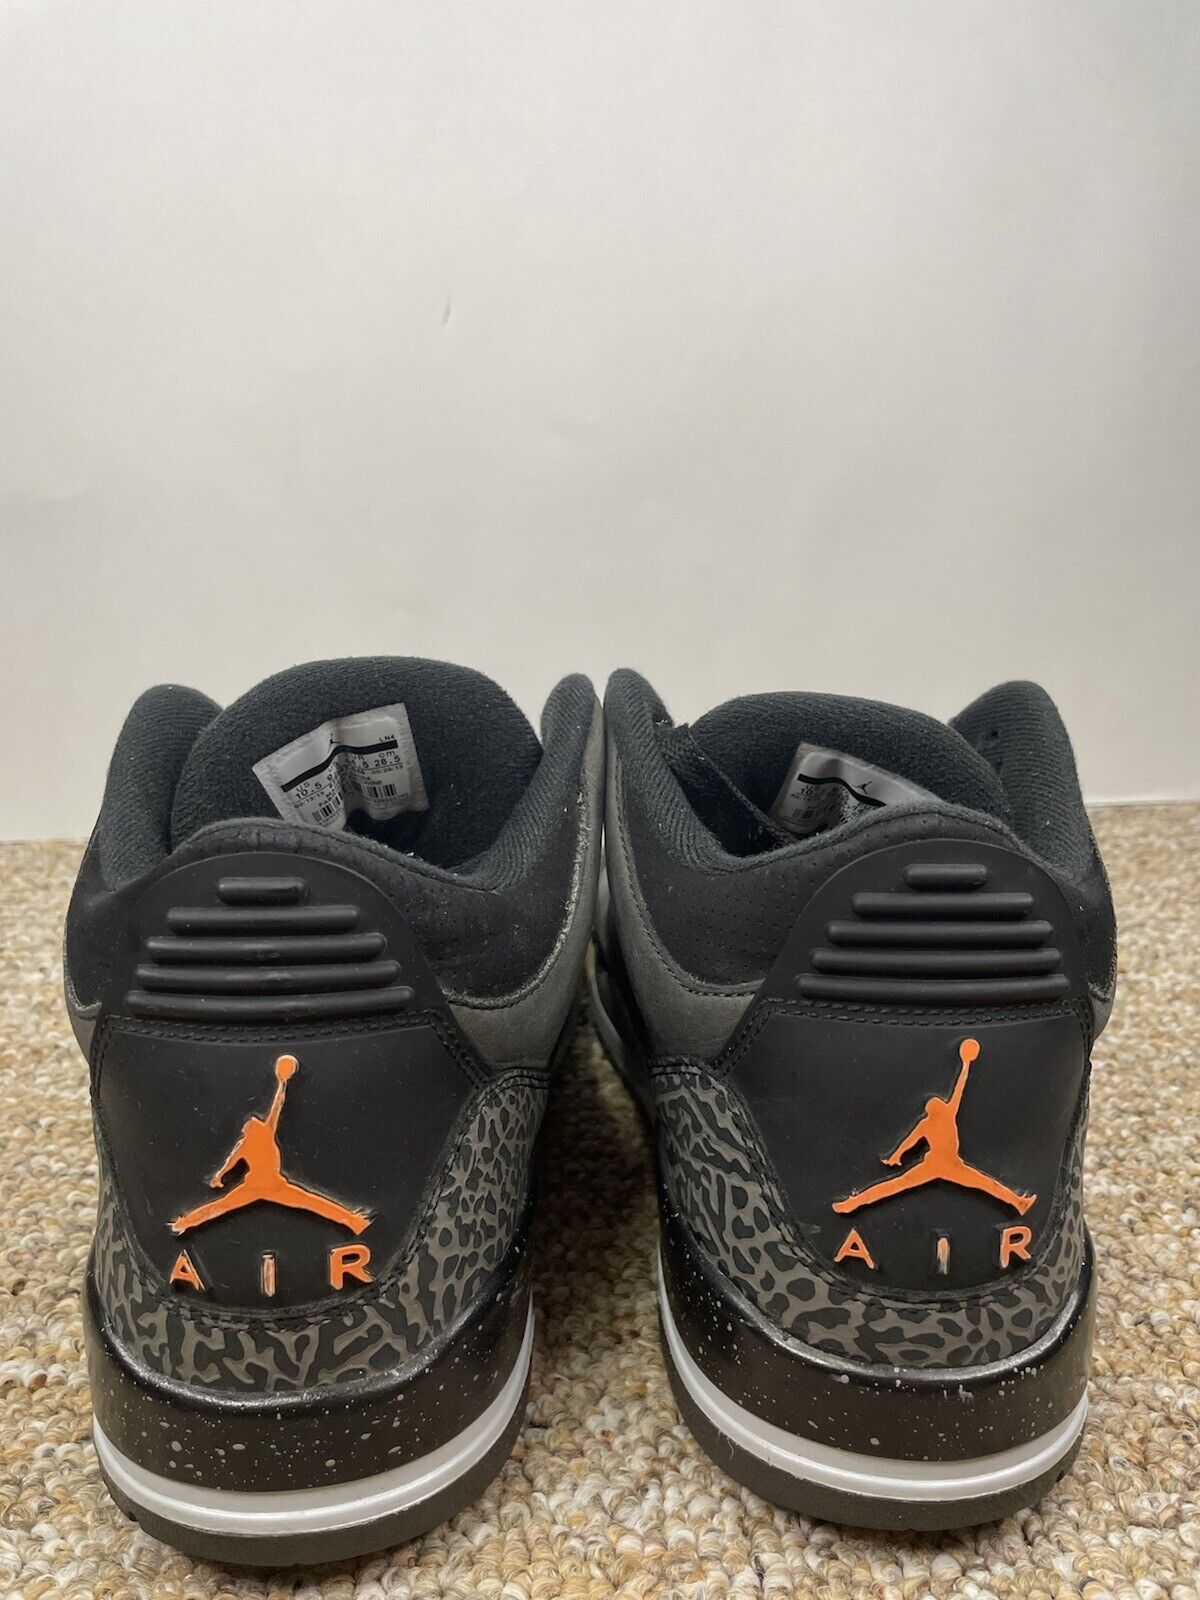 Air Jordan Retro Fear Pack Size 10.5 626967-040 | eBay